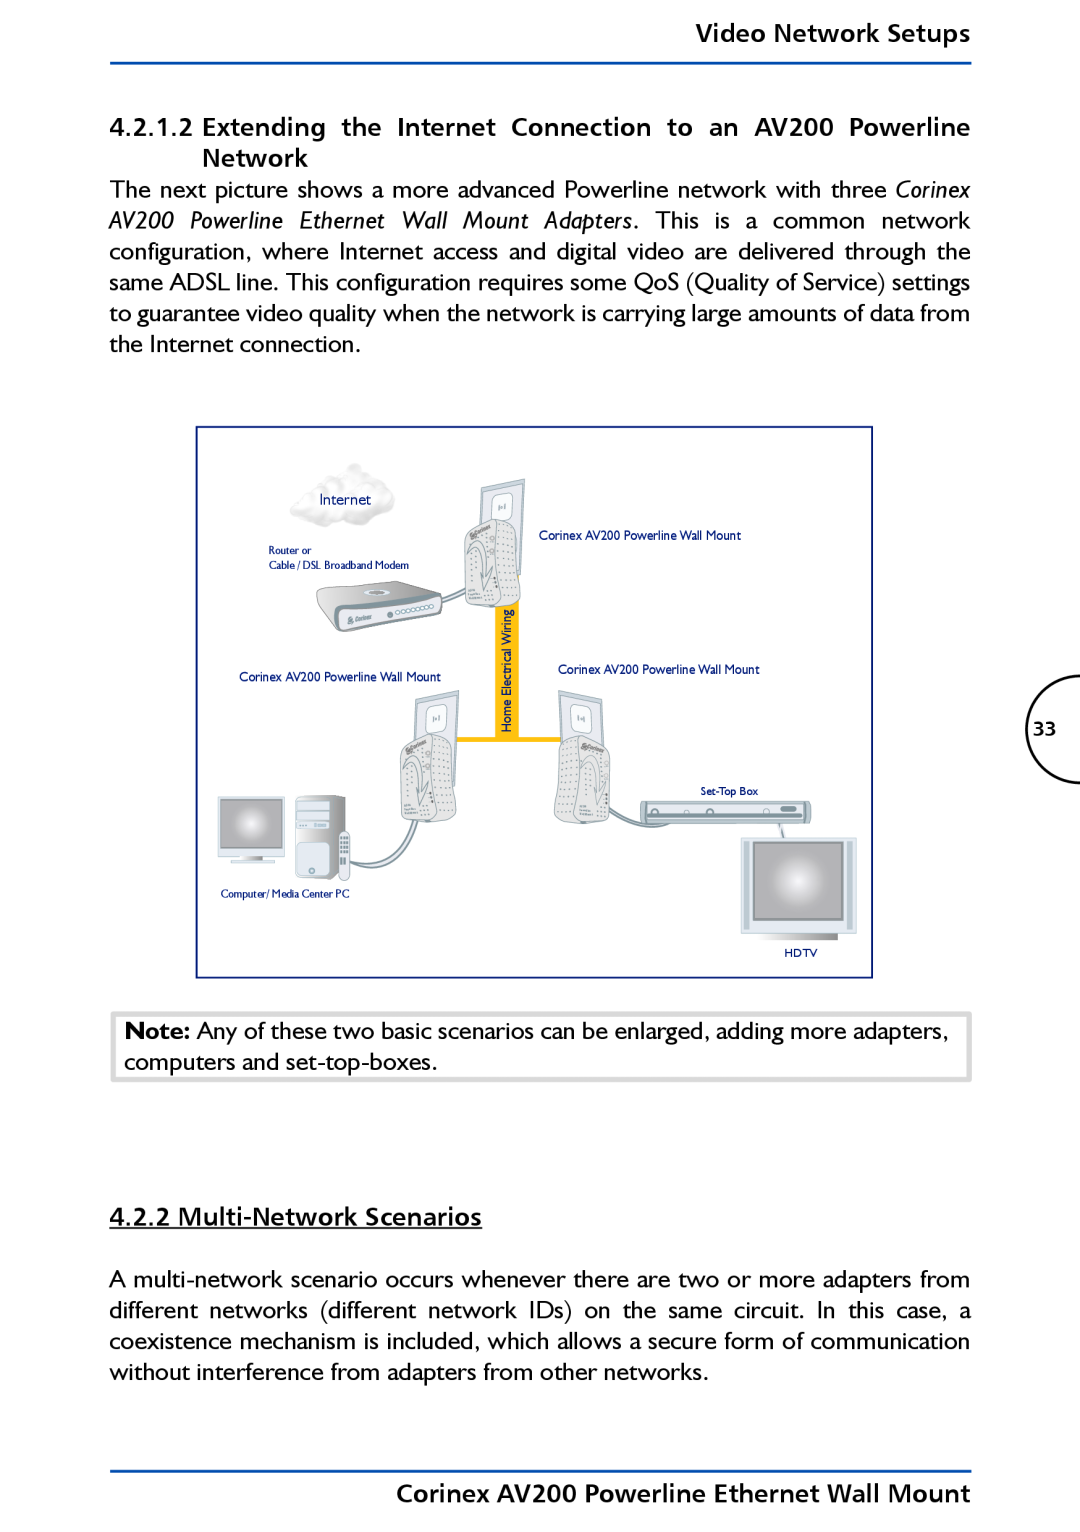 DeWalt manual Multi-Network Scenarios, Video Network Setups, Corinex AV200 Powerline Ethernet Wall Mount, Internet 